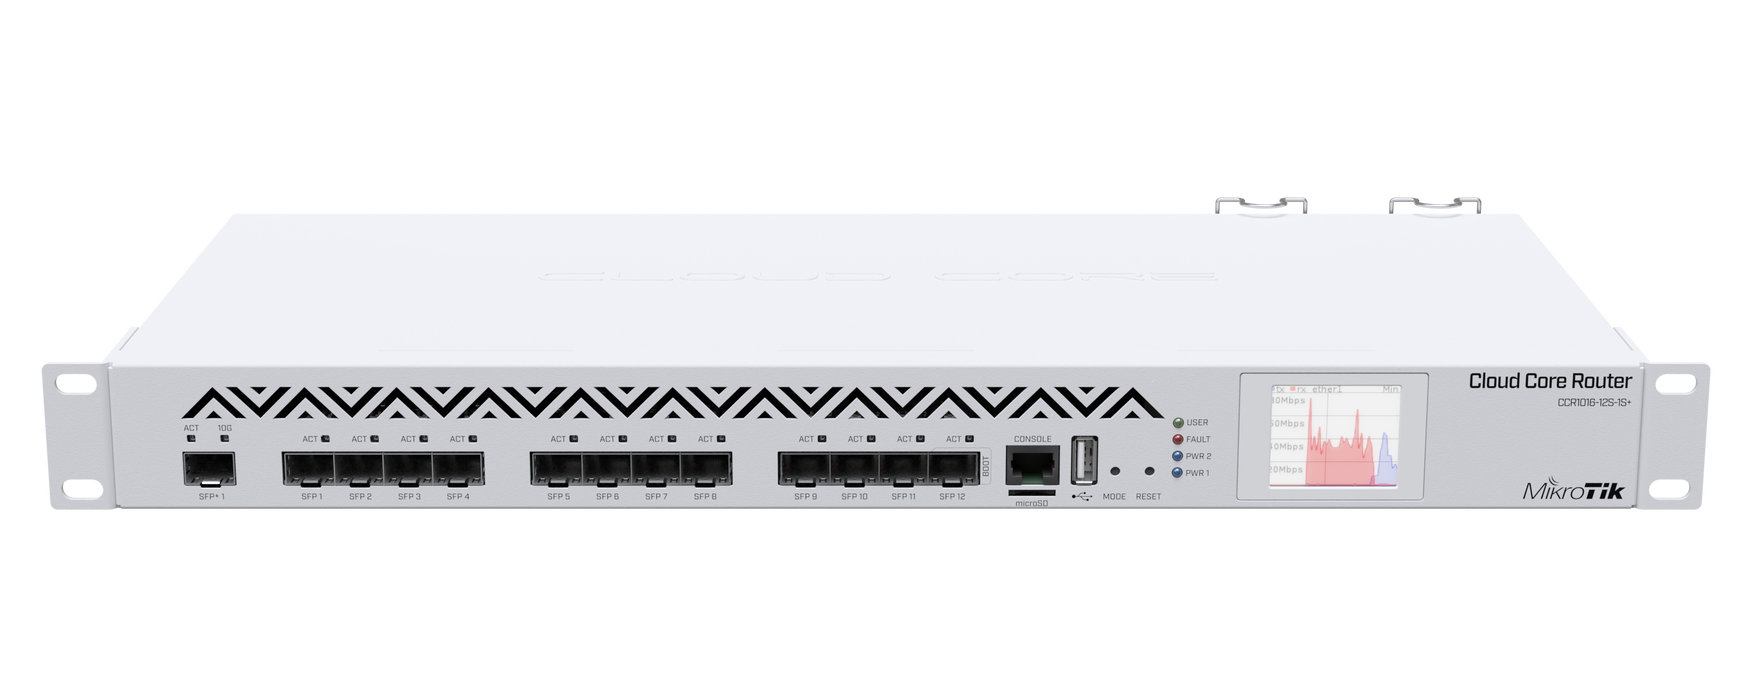 Mikrotik Cloud Core Router 1016-12S-1S+ with Tilera Tile-Gx16 CPU (16-cores, 1.2GHz per core), 2GB RAM, 12x SFP cages, 1x SFP+ cage, RouterOS L6, 1U rackmount case, Dual PSU, LCD panel.